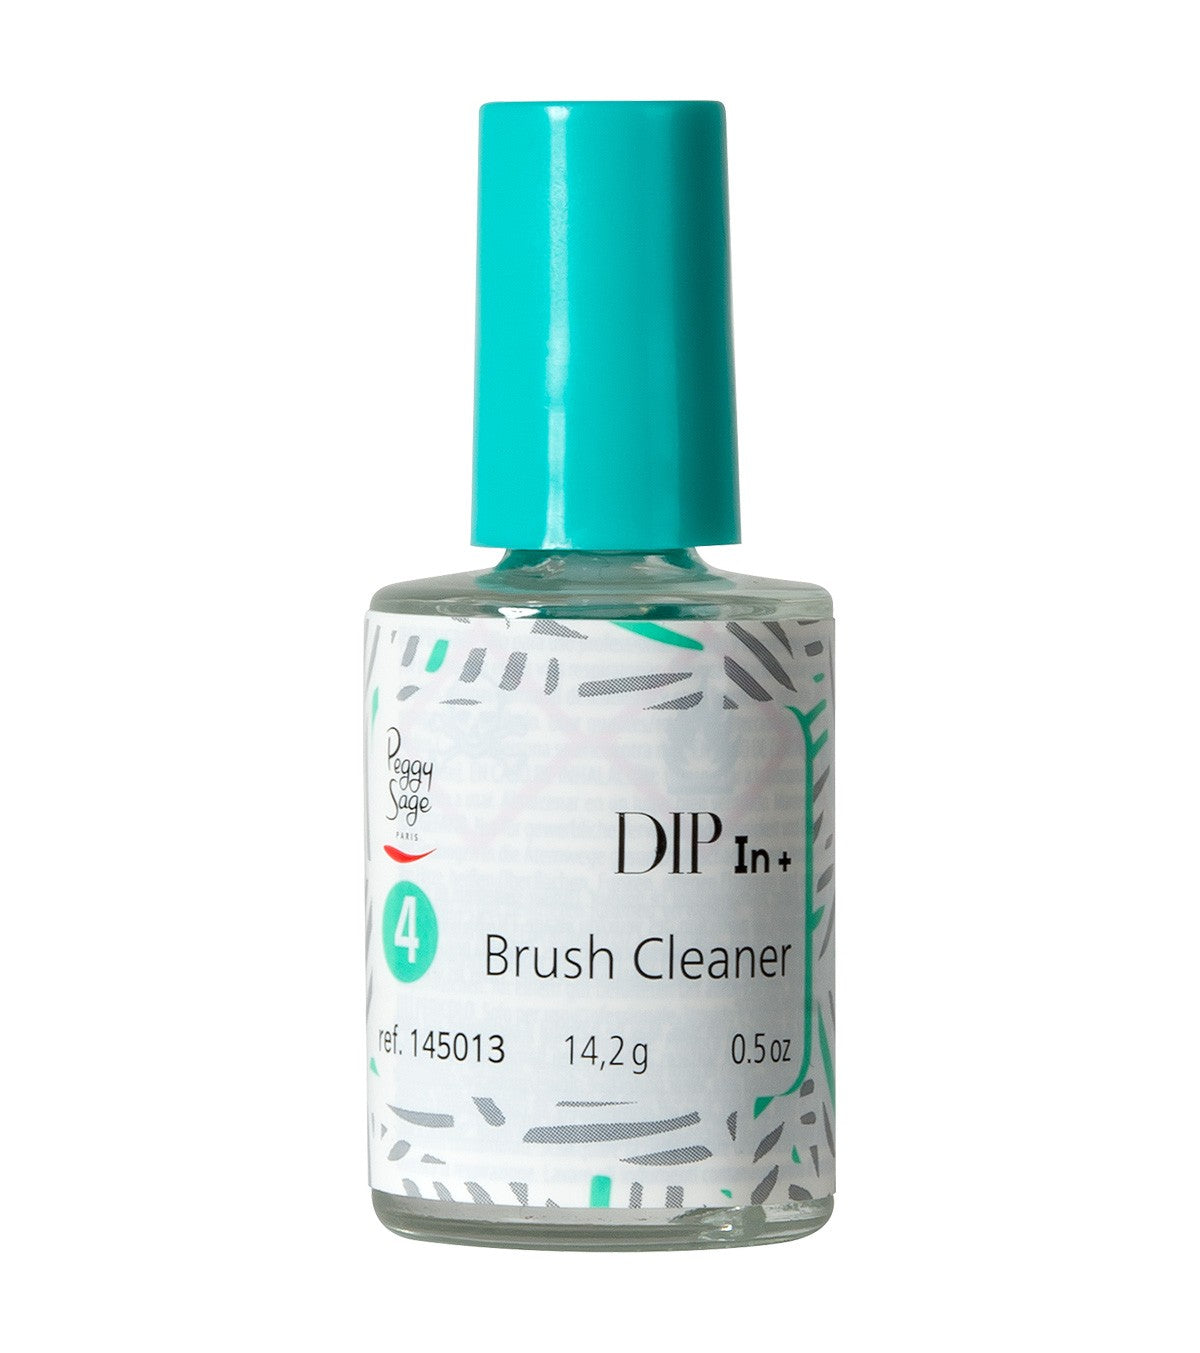 Dip in + Brush Cleaner 4 Ref 145013